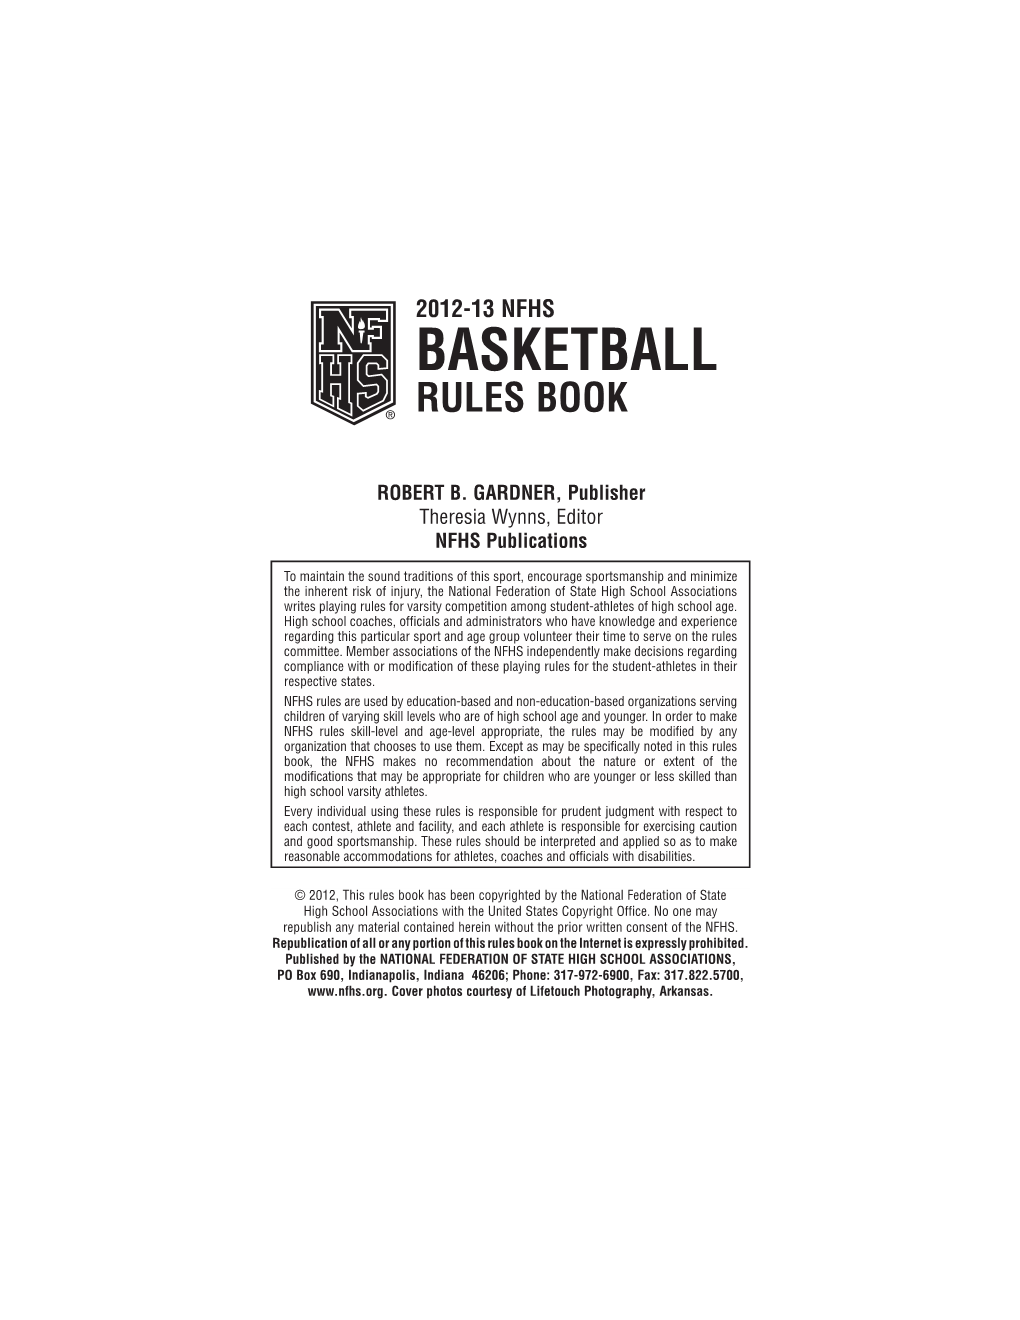 2012-13 Basketball Rules Book